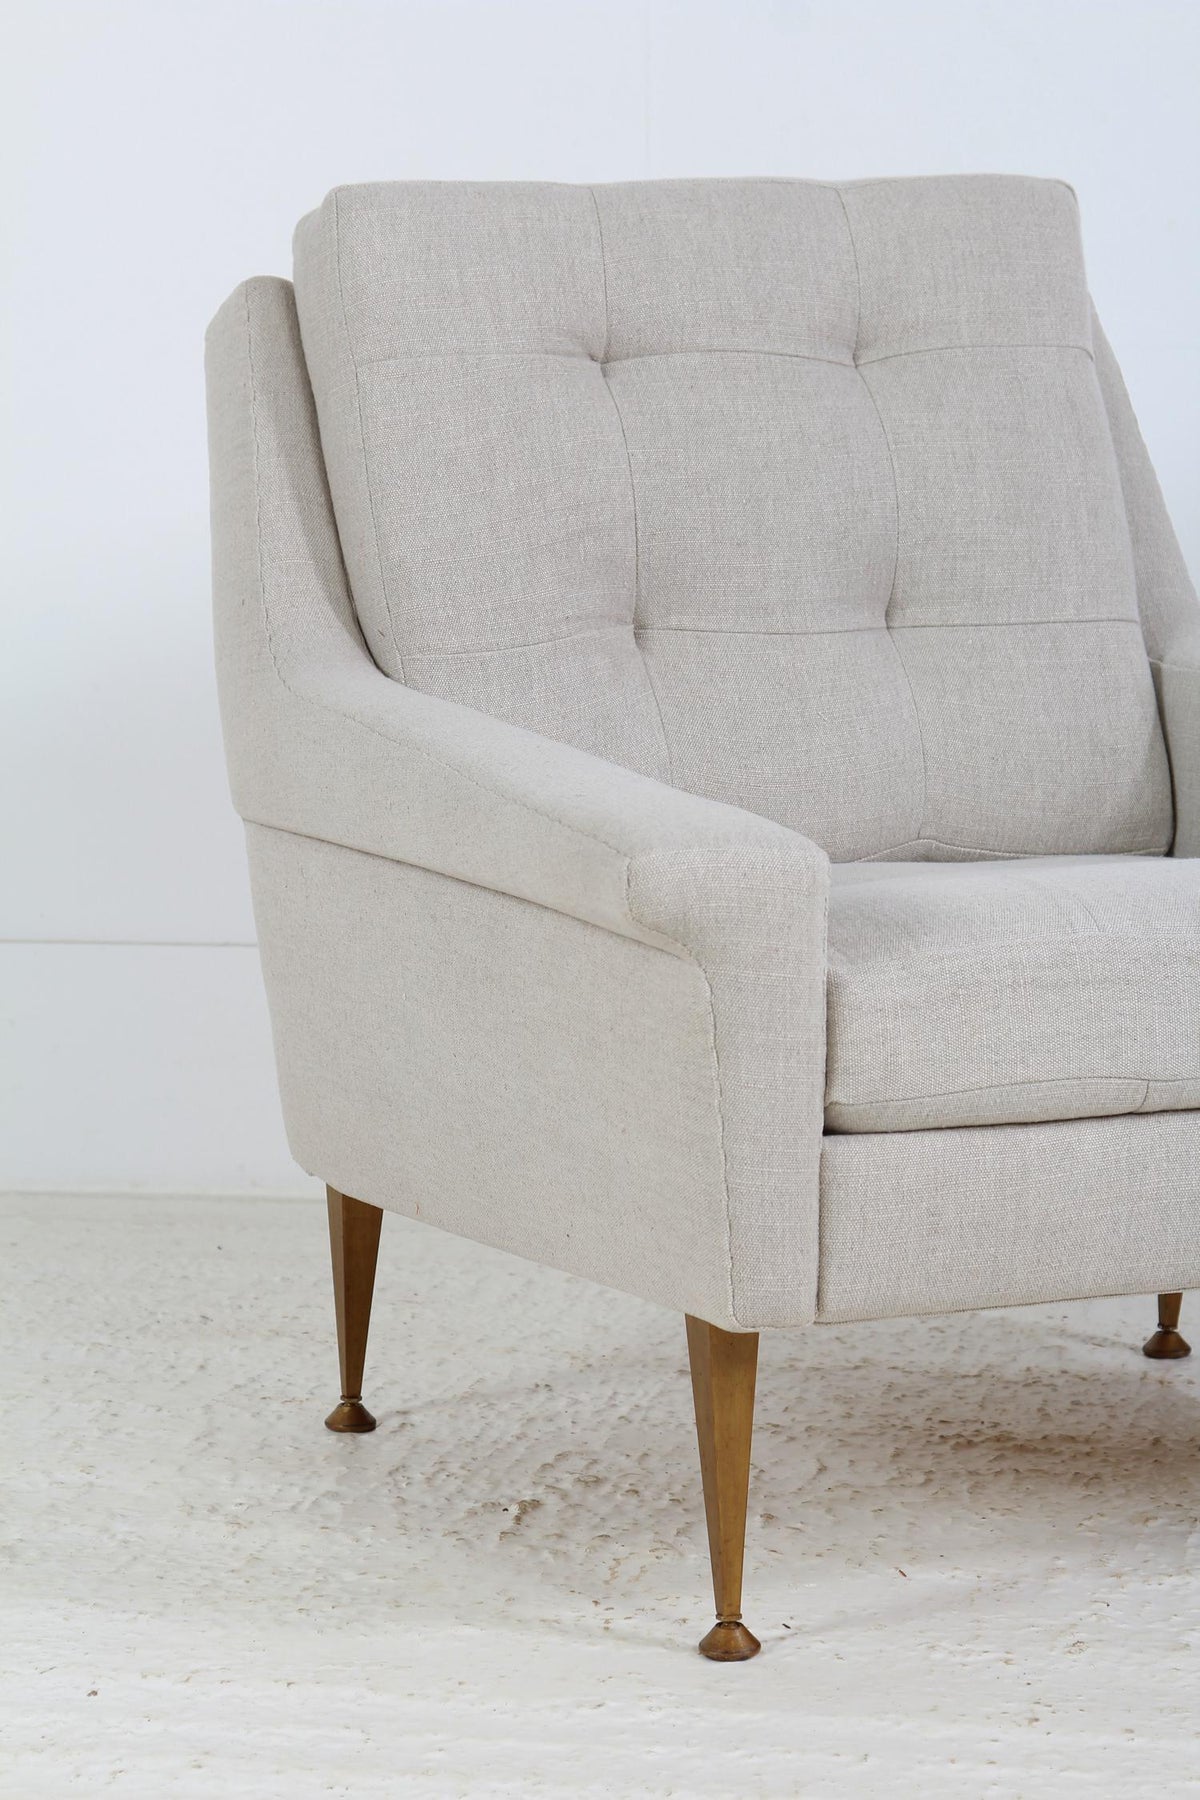 Stylish Italian Midcentury 1950s Lounge Chair